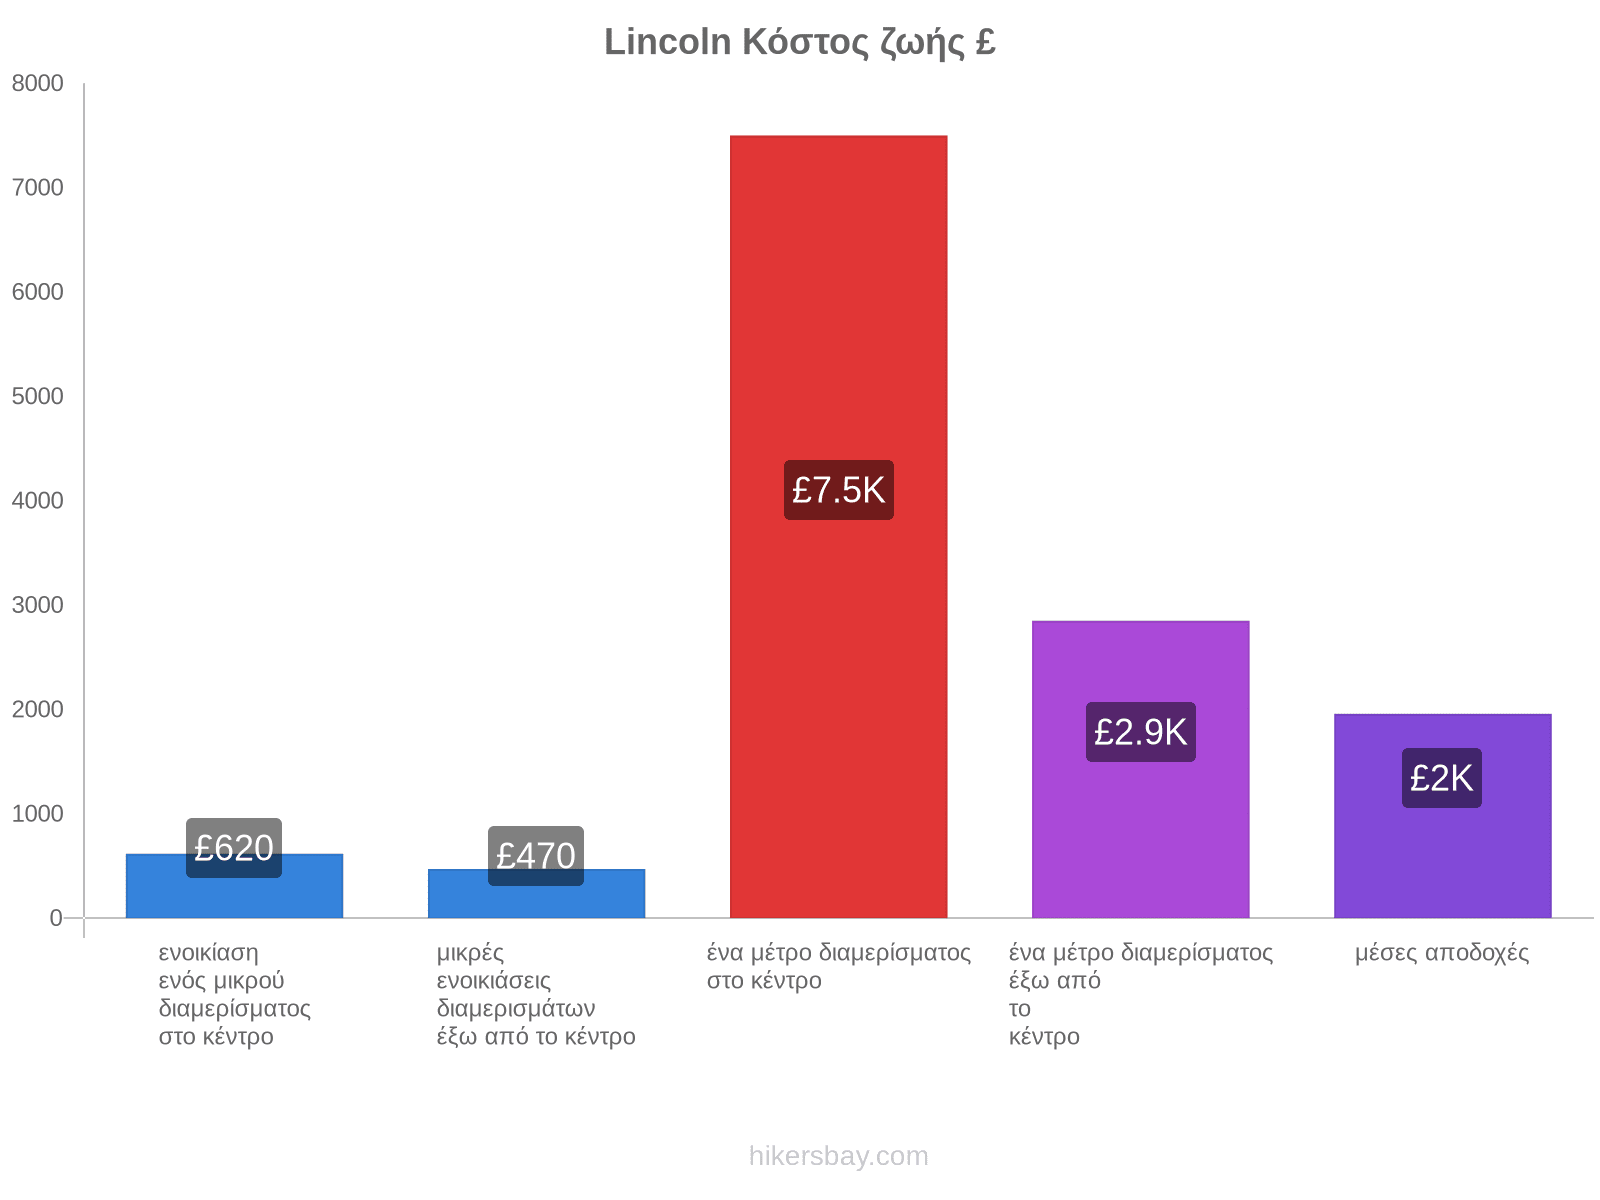 Lincoln κόστος ζωής hikersbay.com